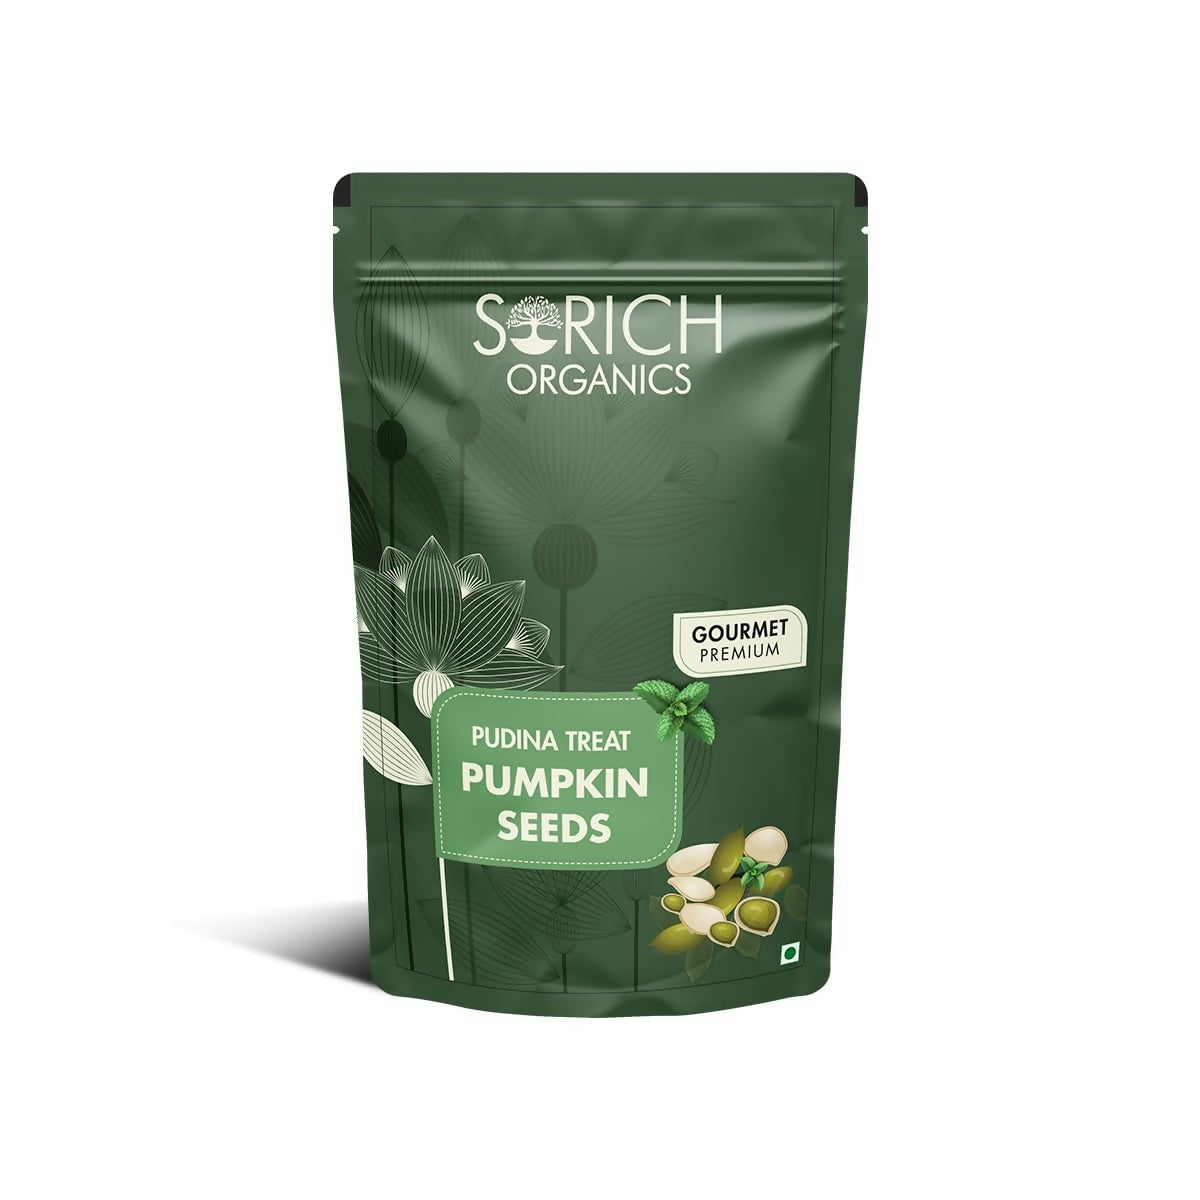 Sorich Organics Pudina Treat Pumpkin Seeds - BUDNE